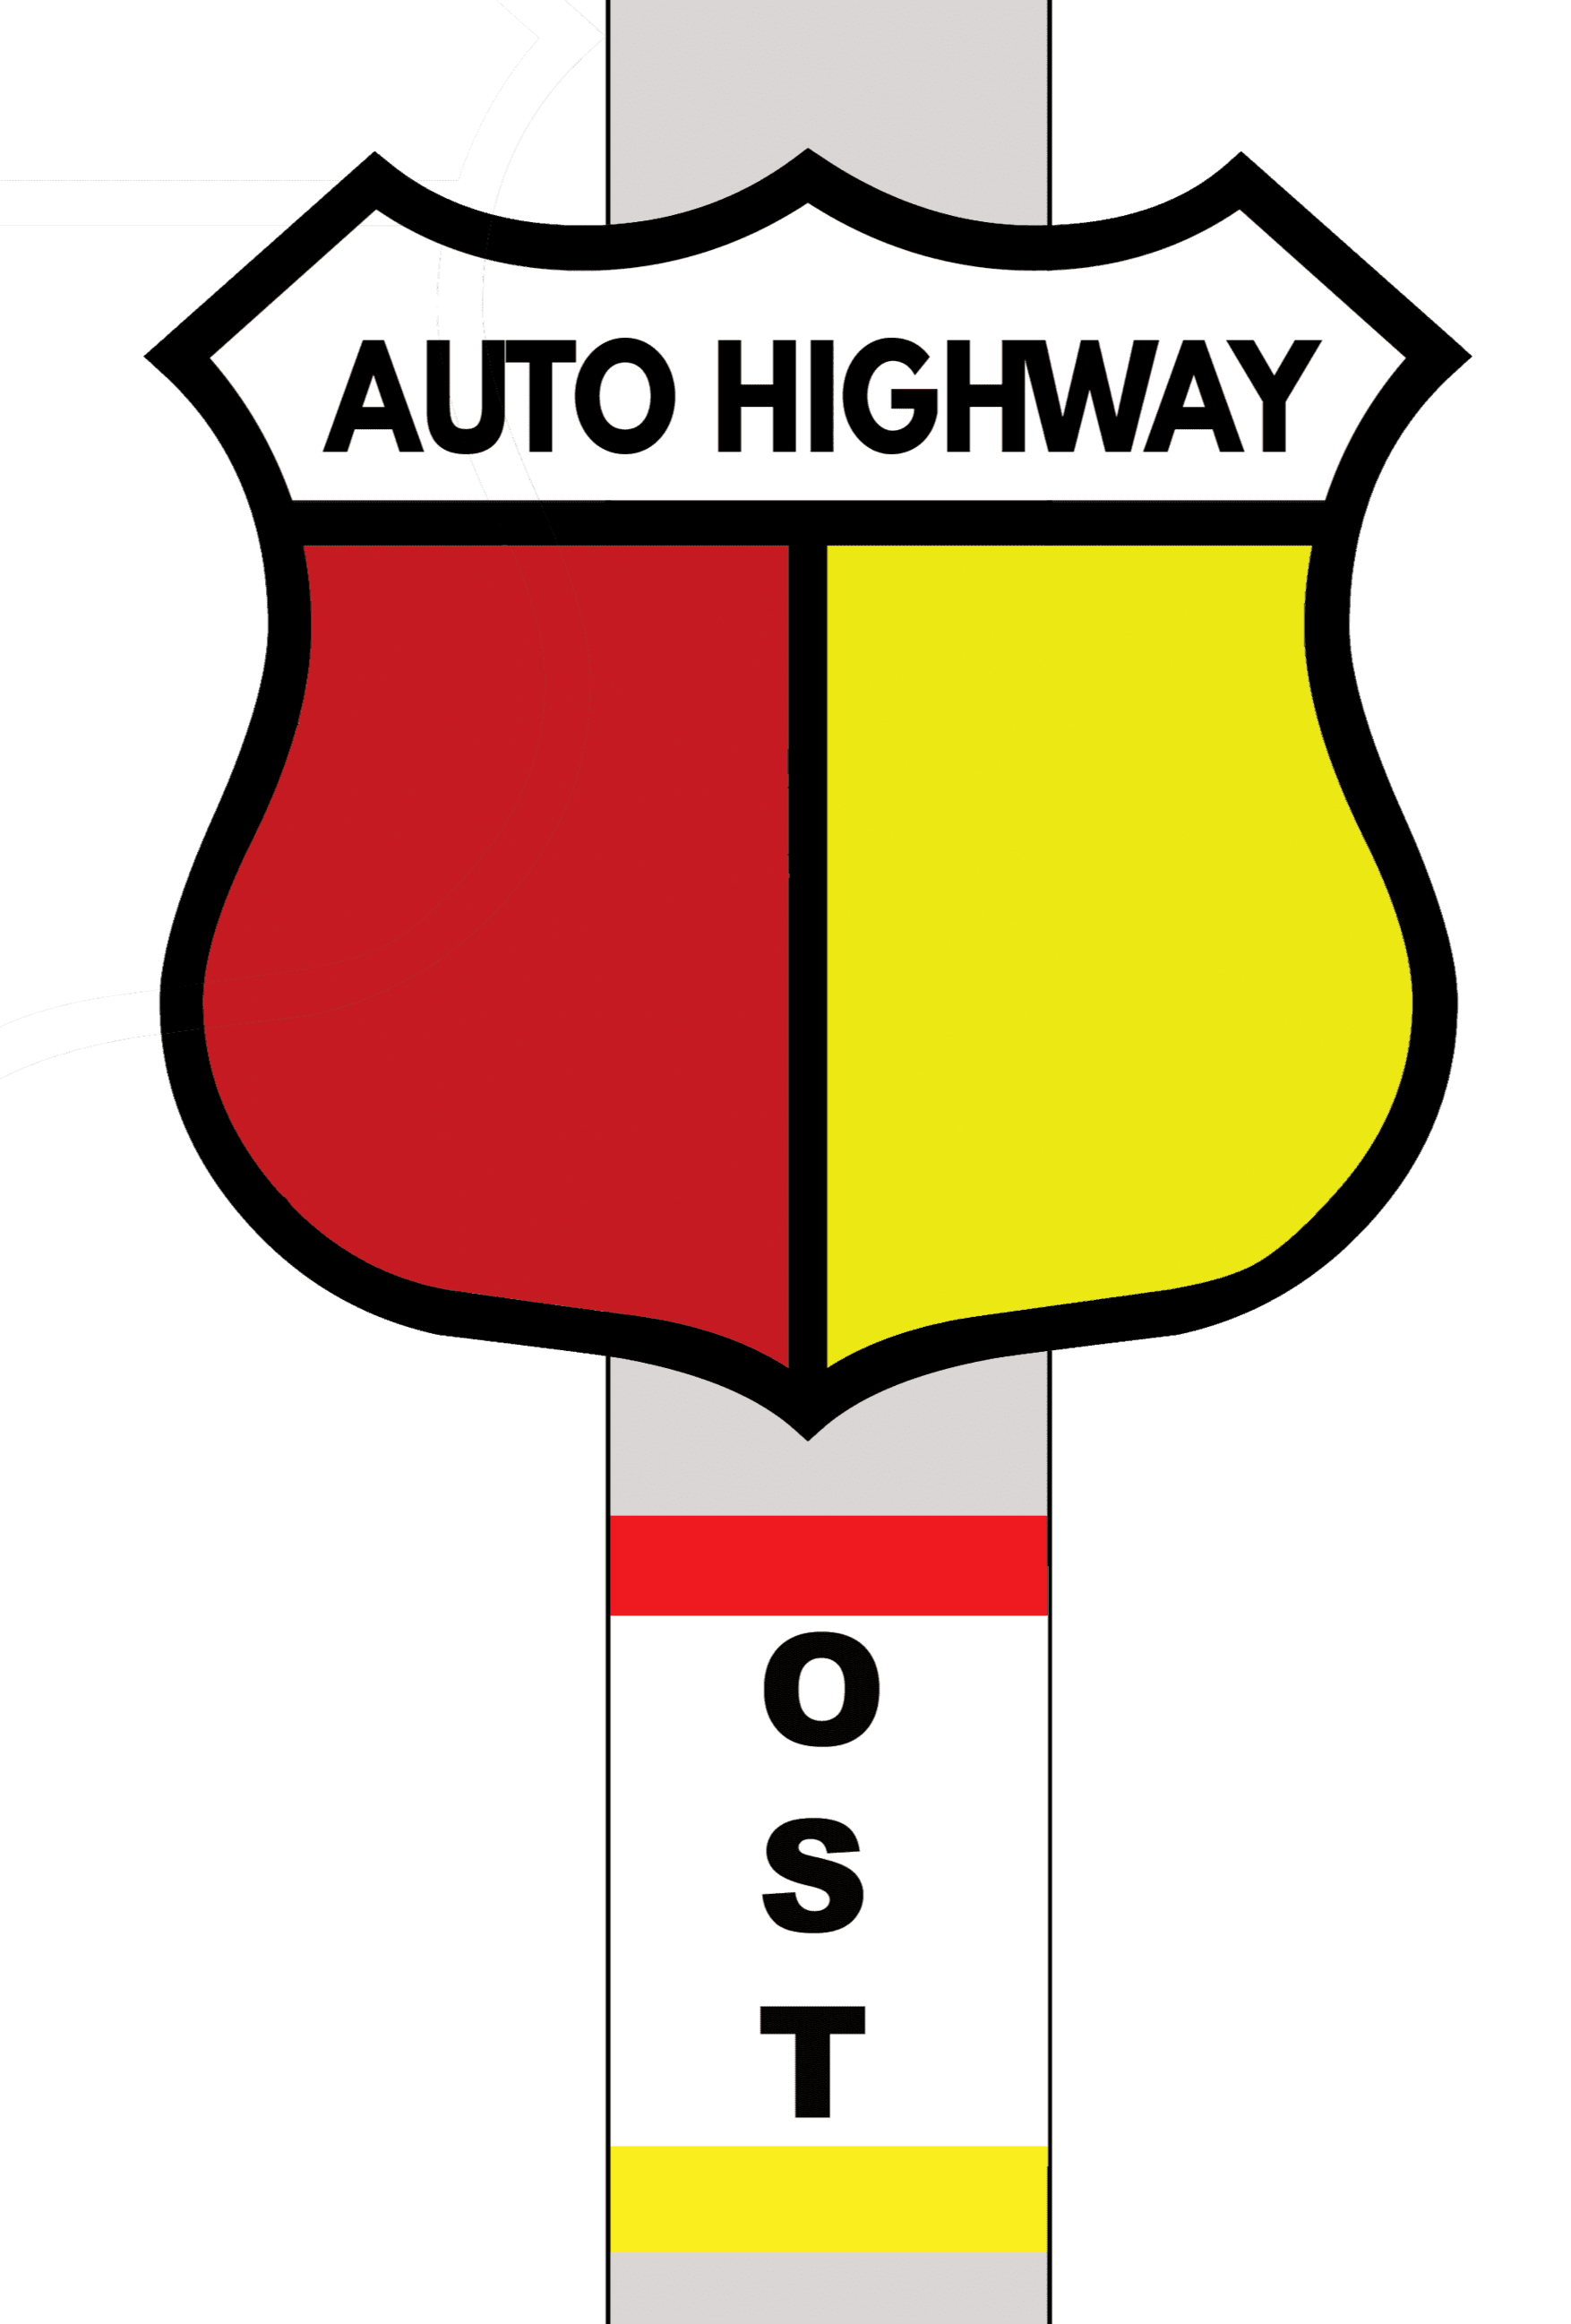 Auto Highway OST emblem